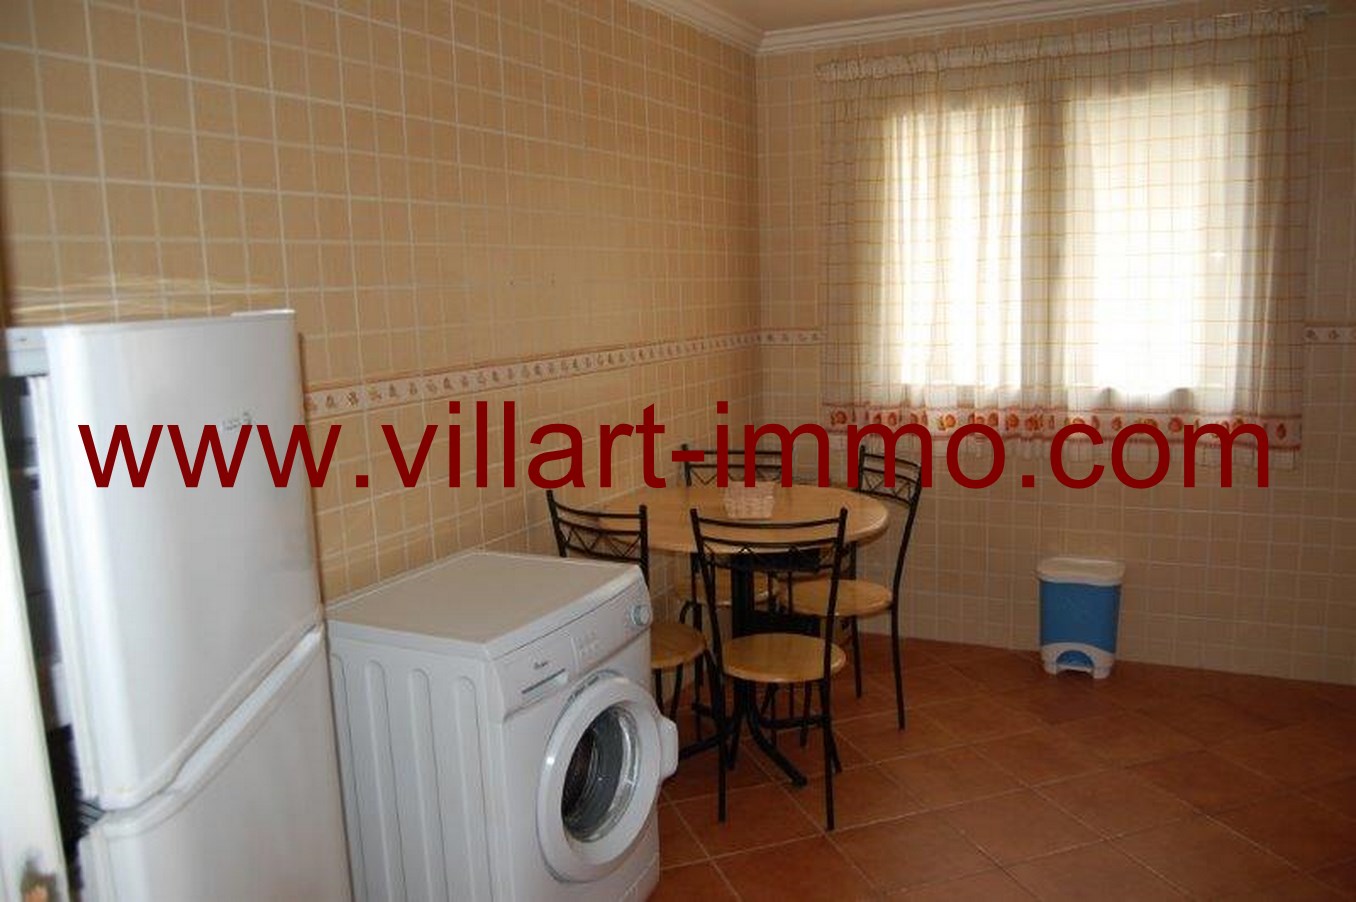 7-Location-Appartement- meublé-Tanger-cuisine -L634-Villart-immo